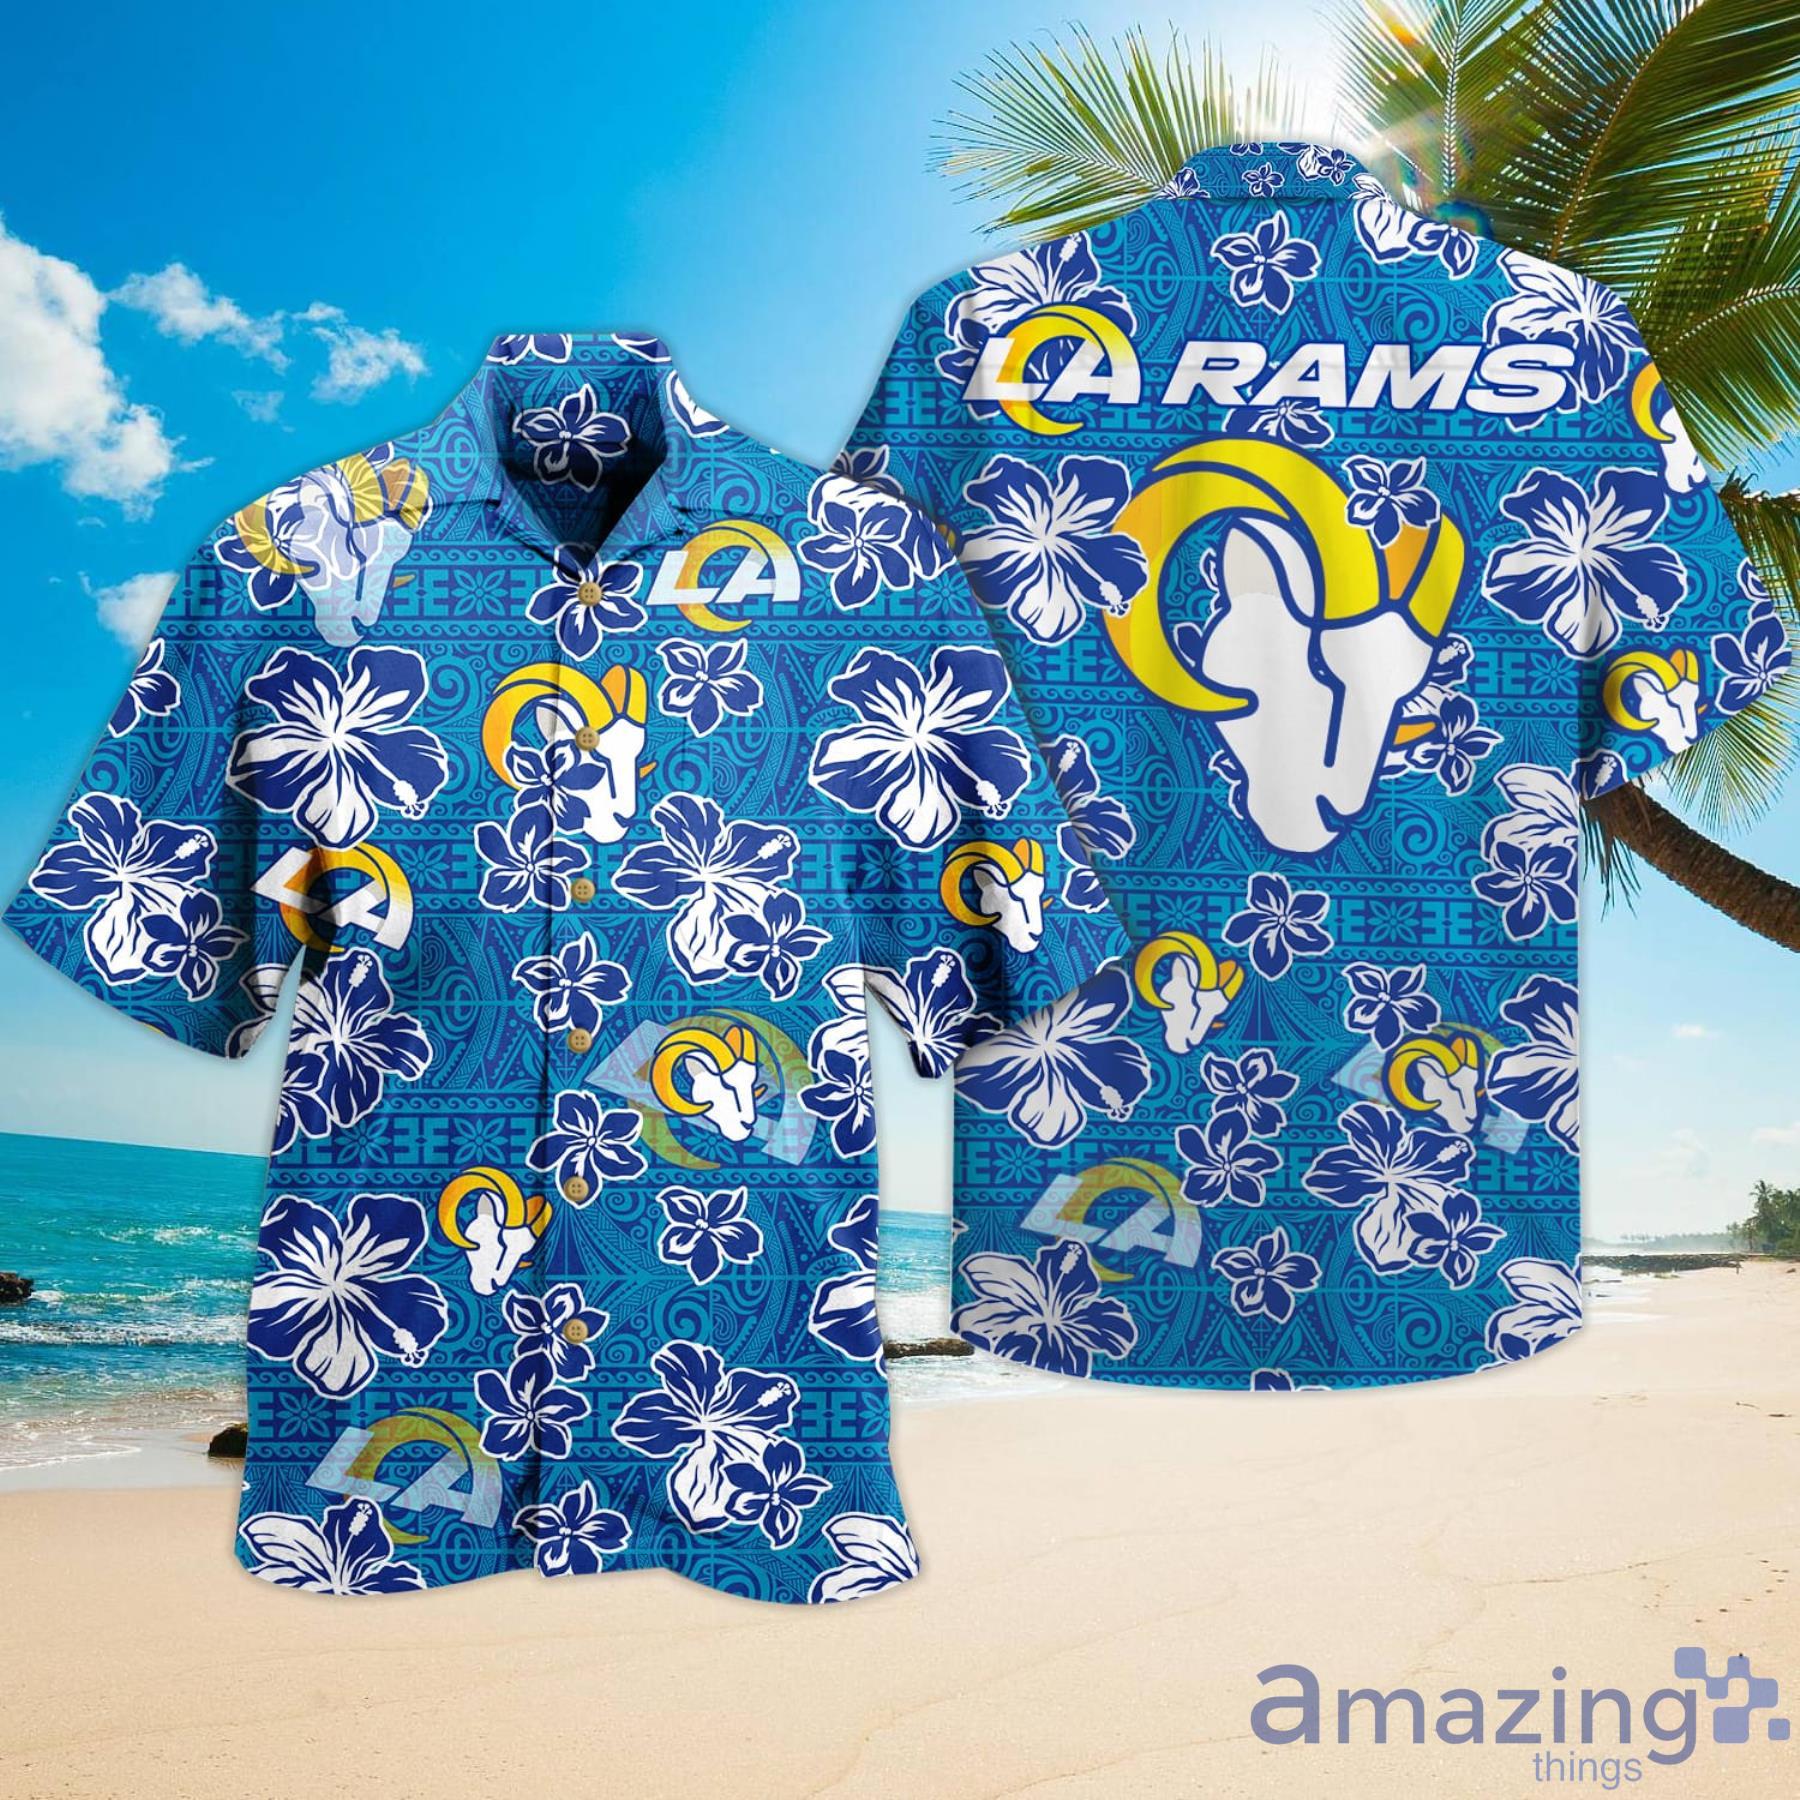 LA Rams Shirt